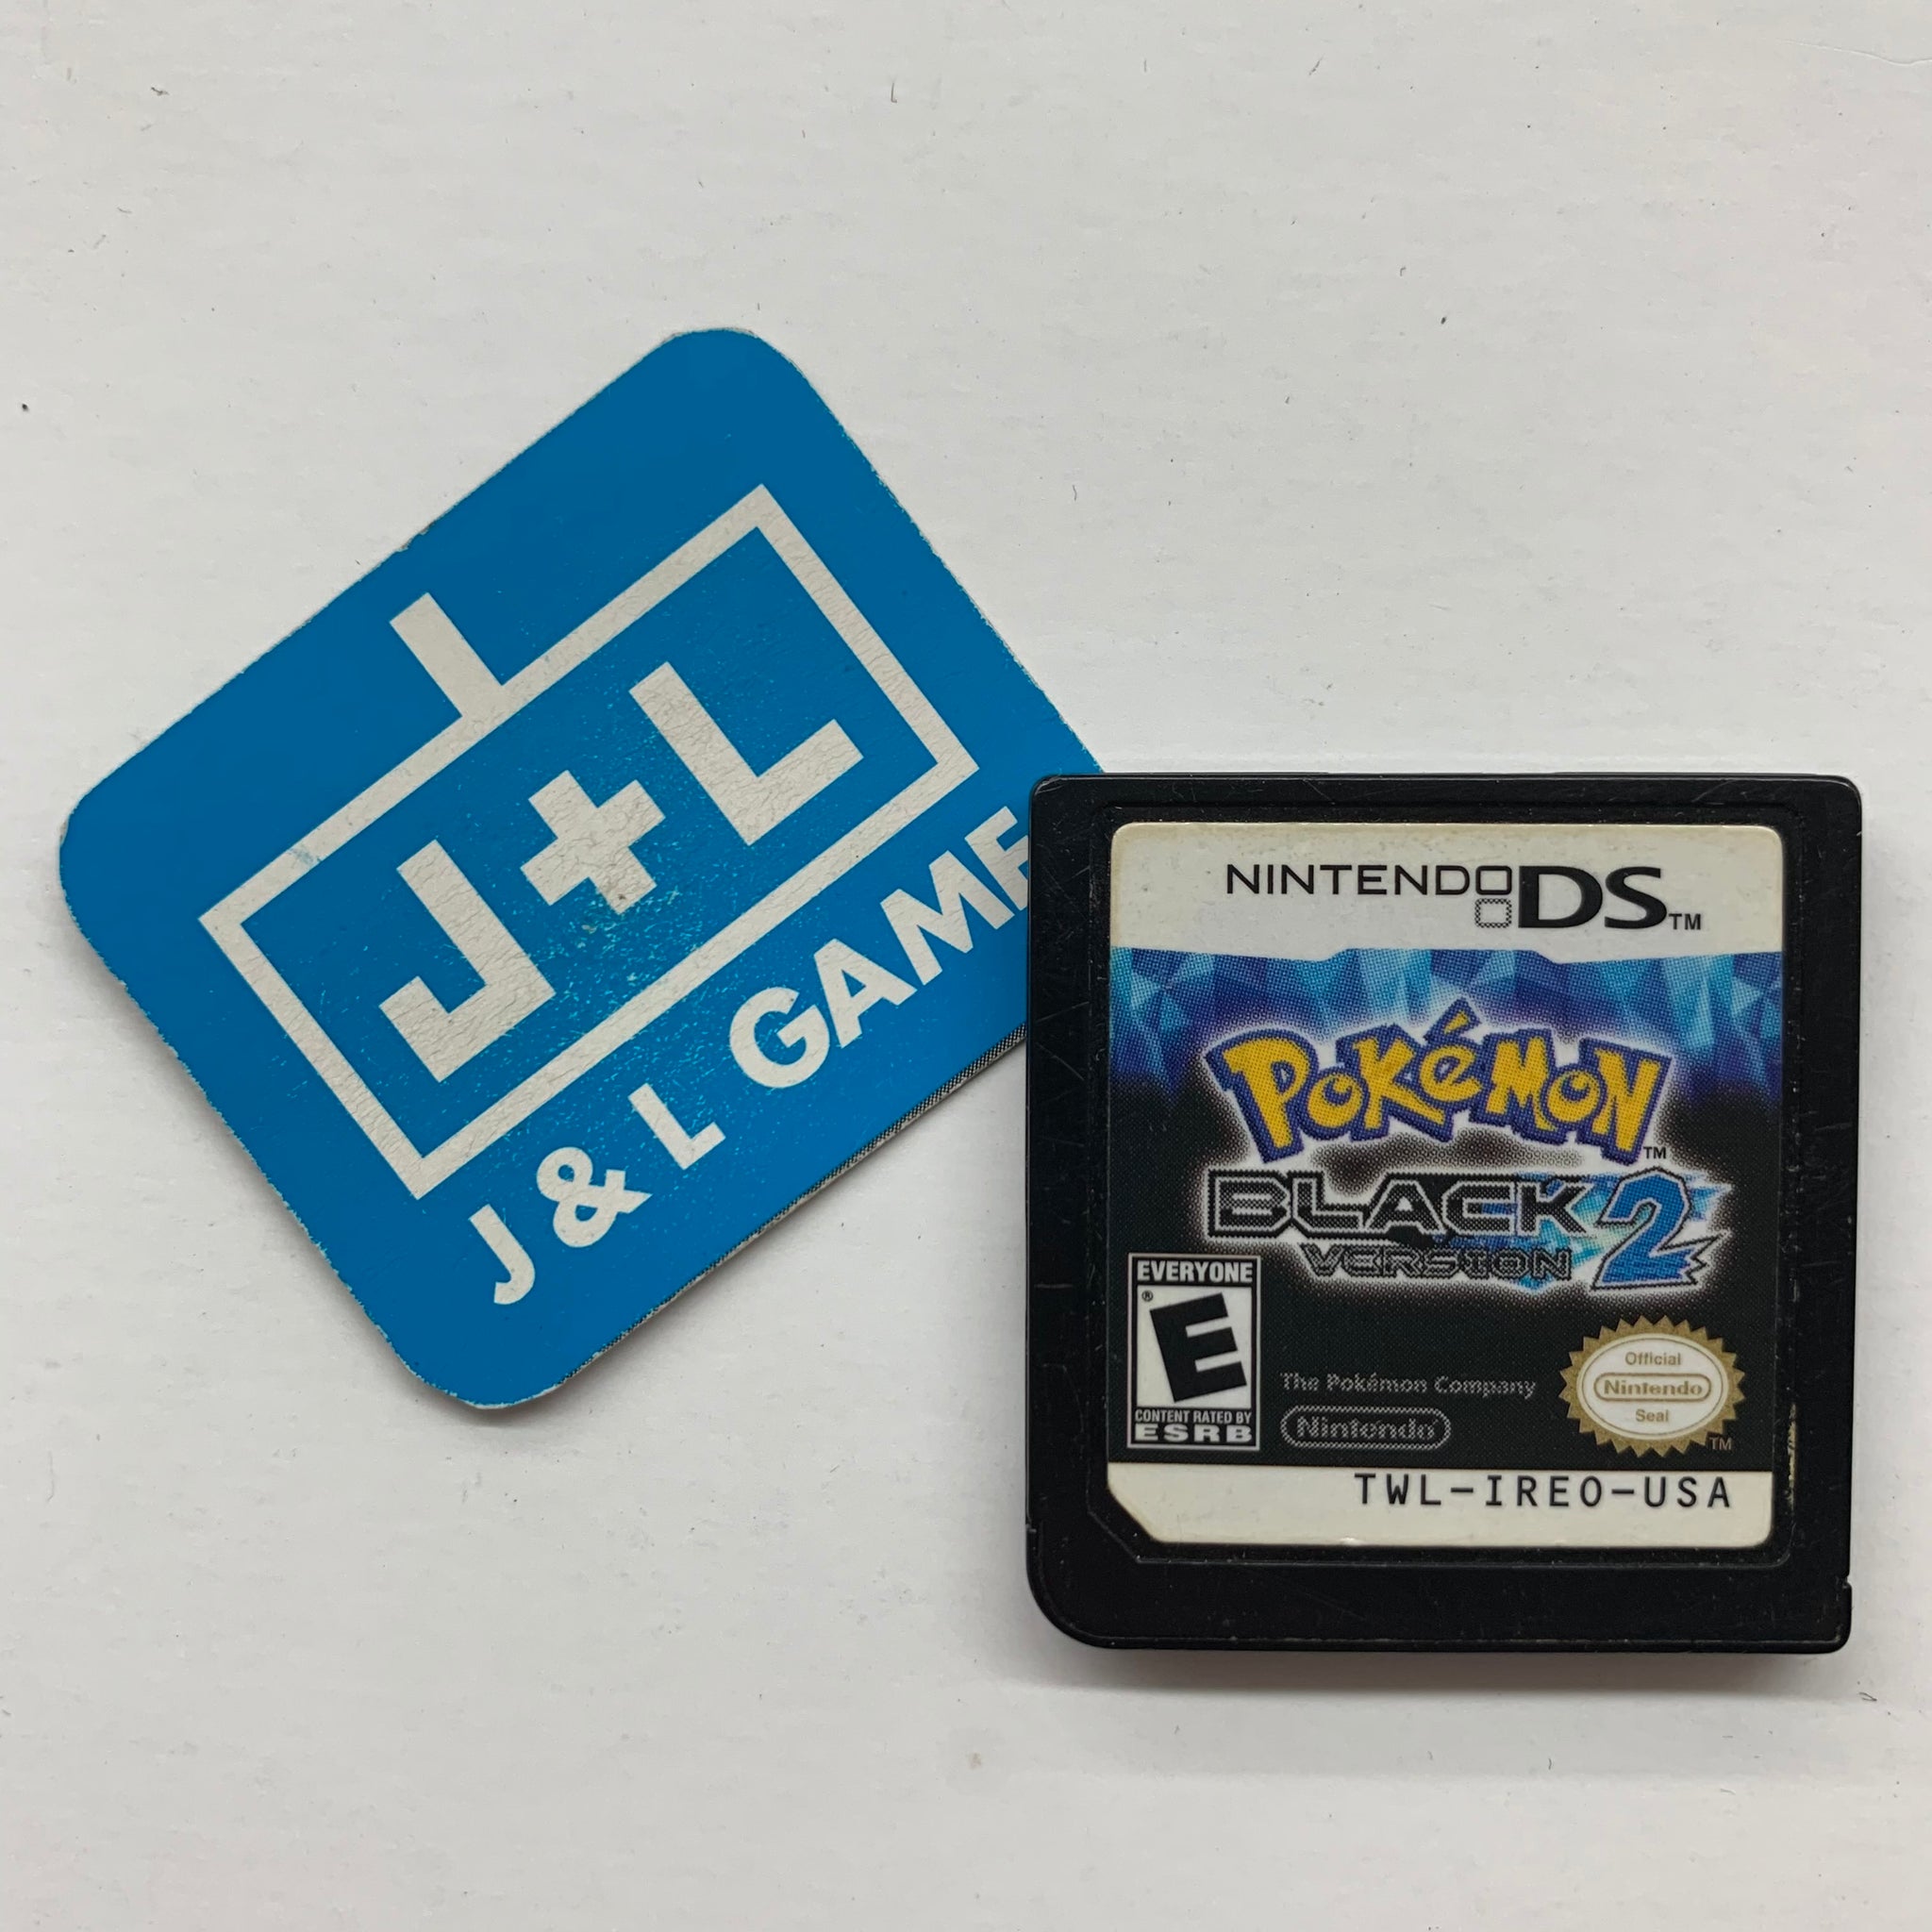 Pokemon Black Version 2 - (NDS) Nintendo DS – J&L Video Games New York City